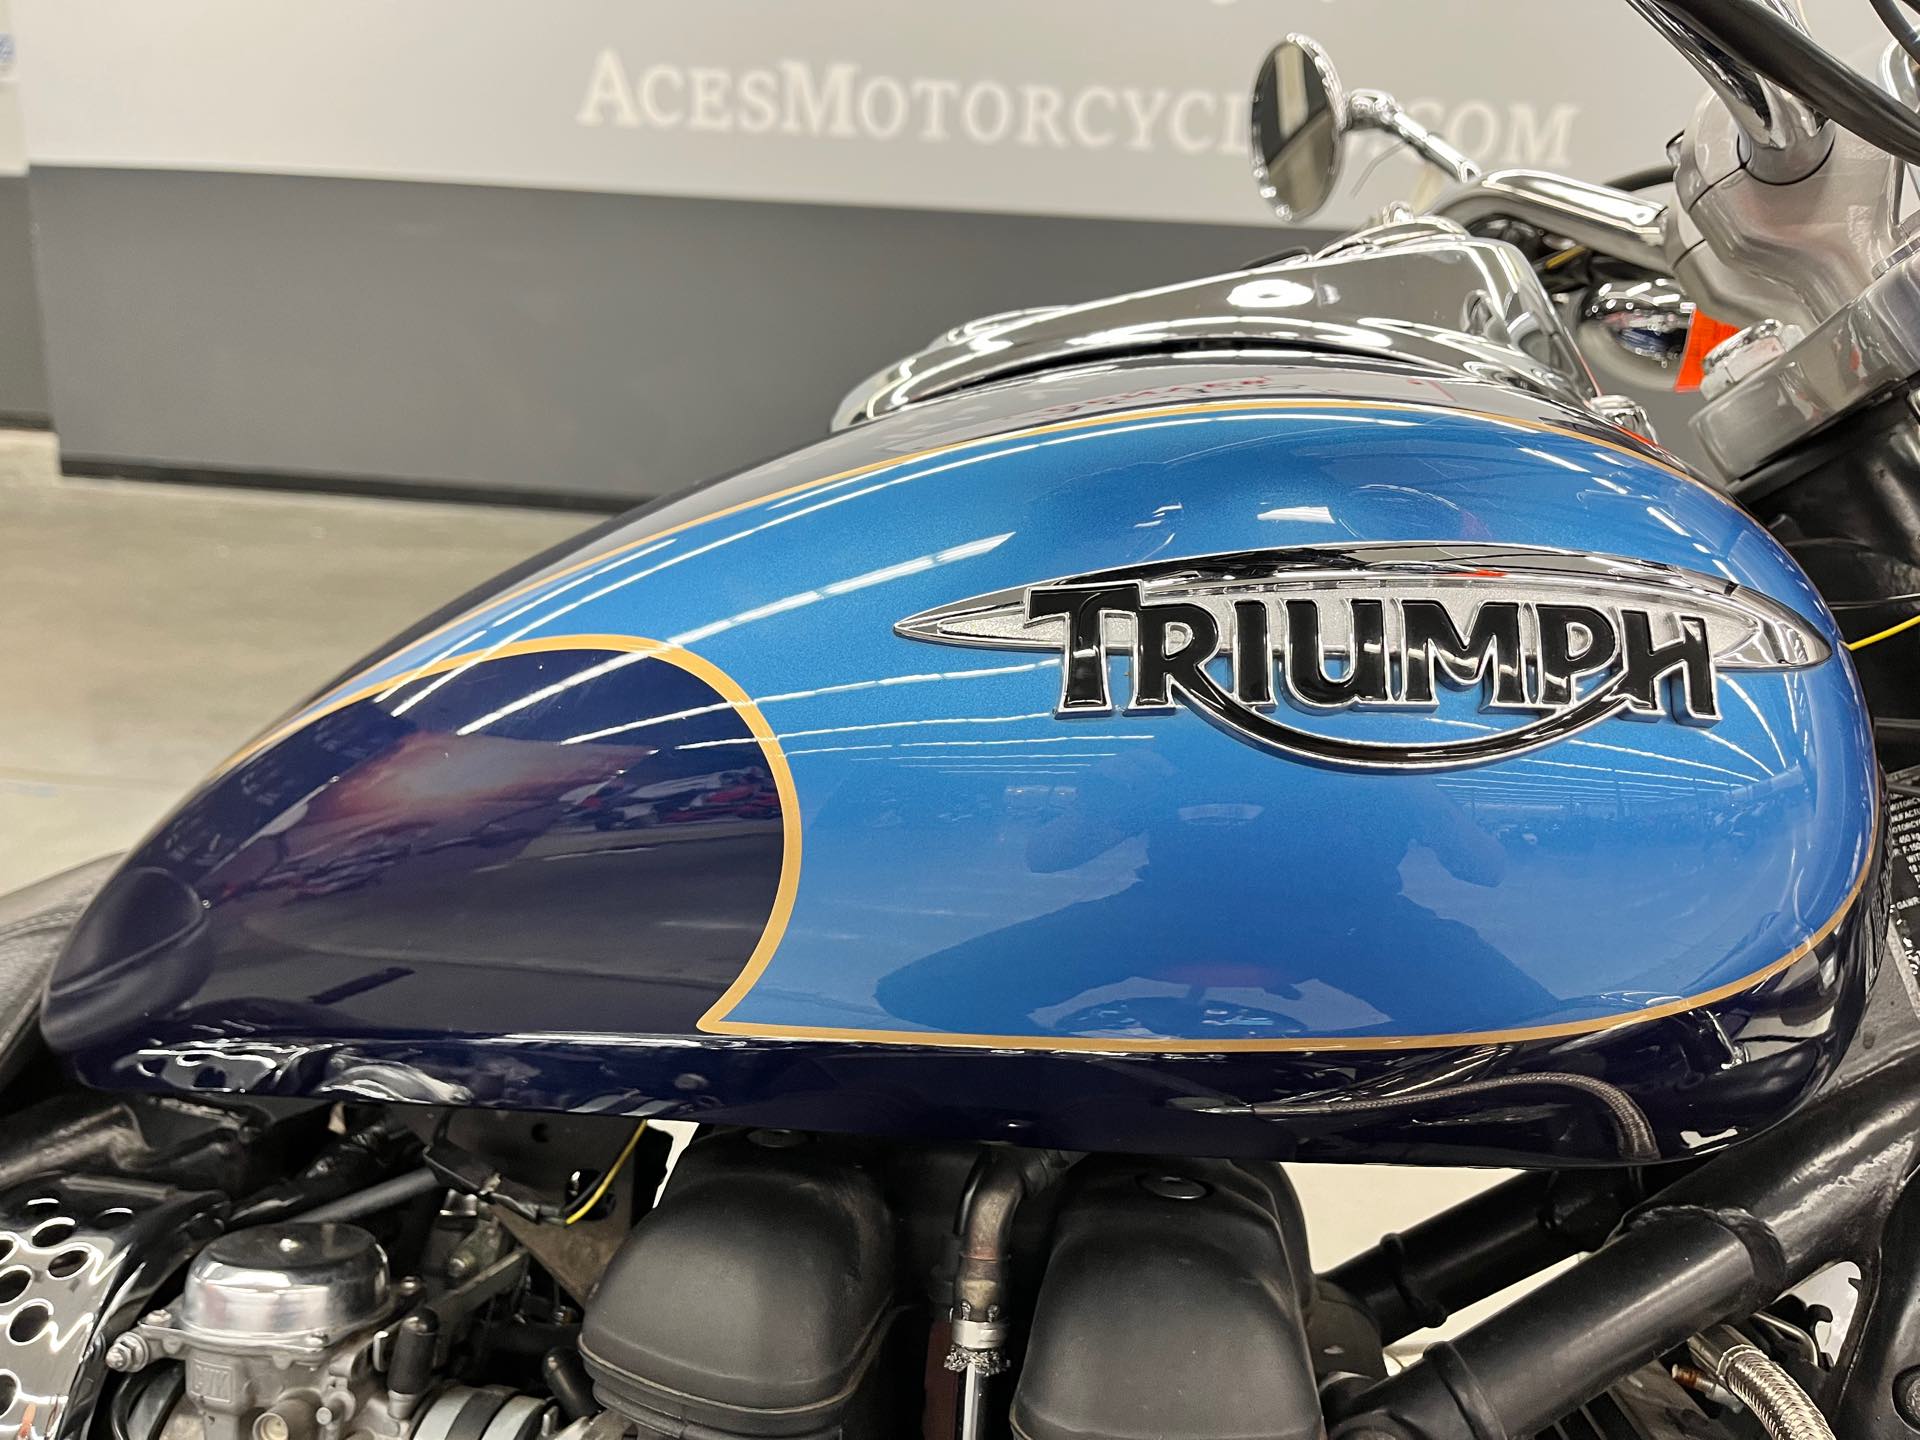 2008 Triumph America Base at Aces Motorcycles - Denver